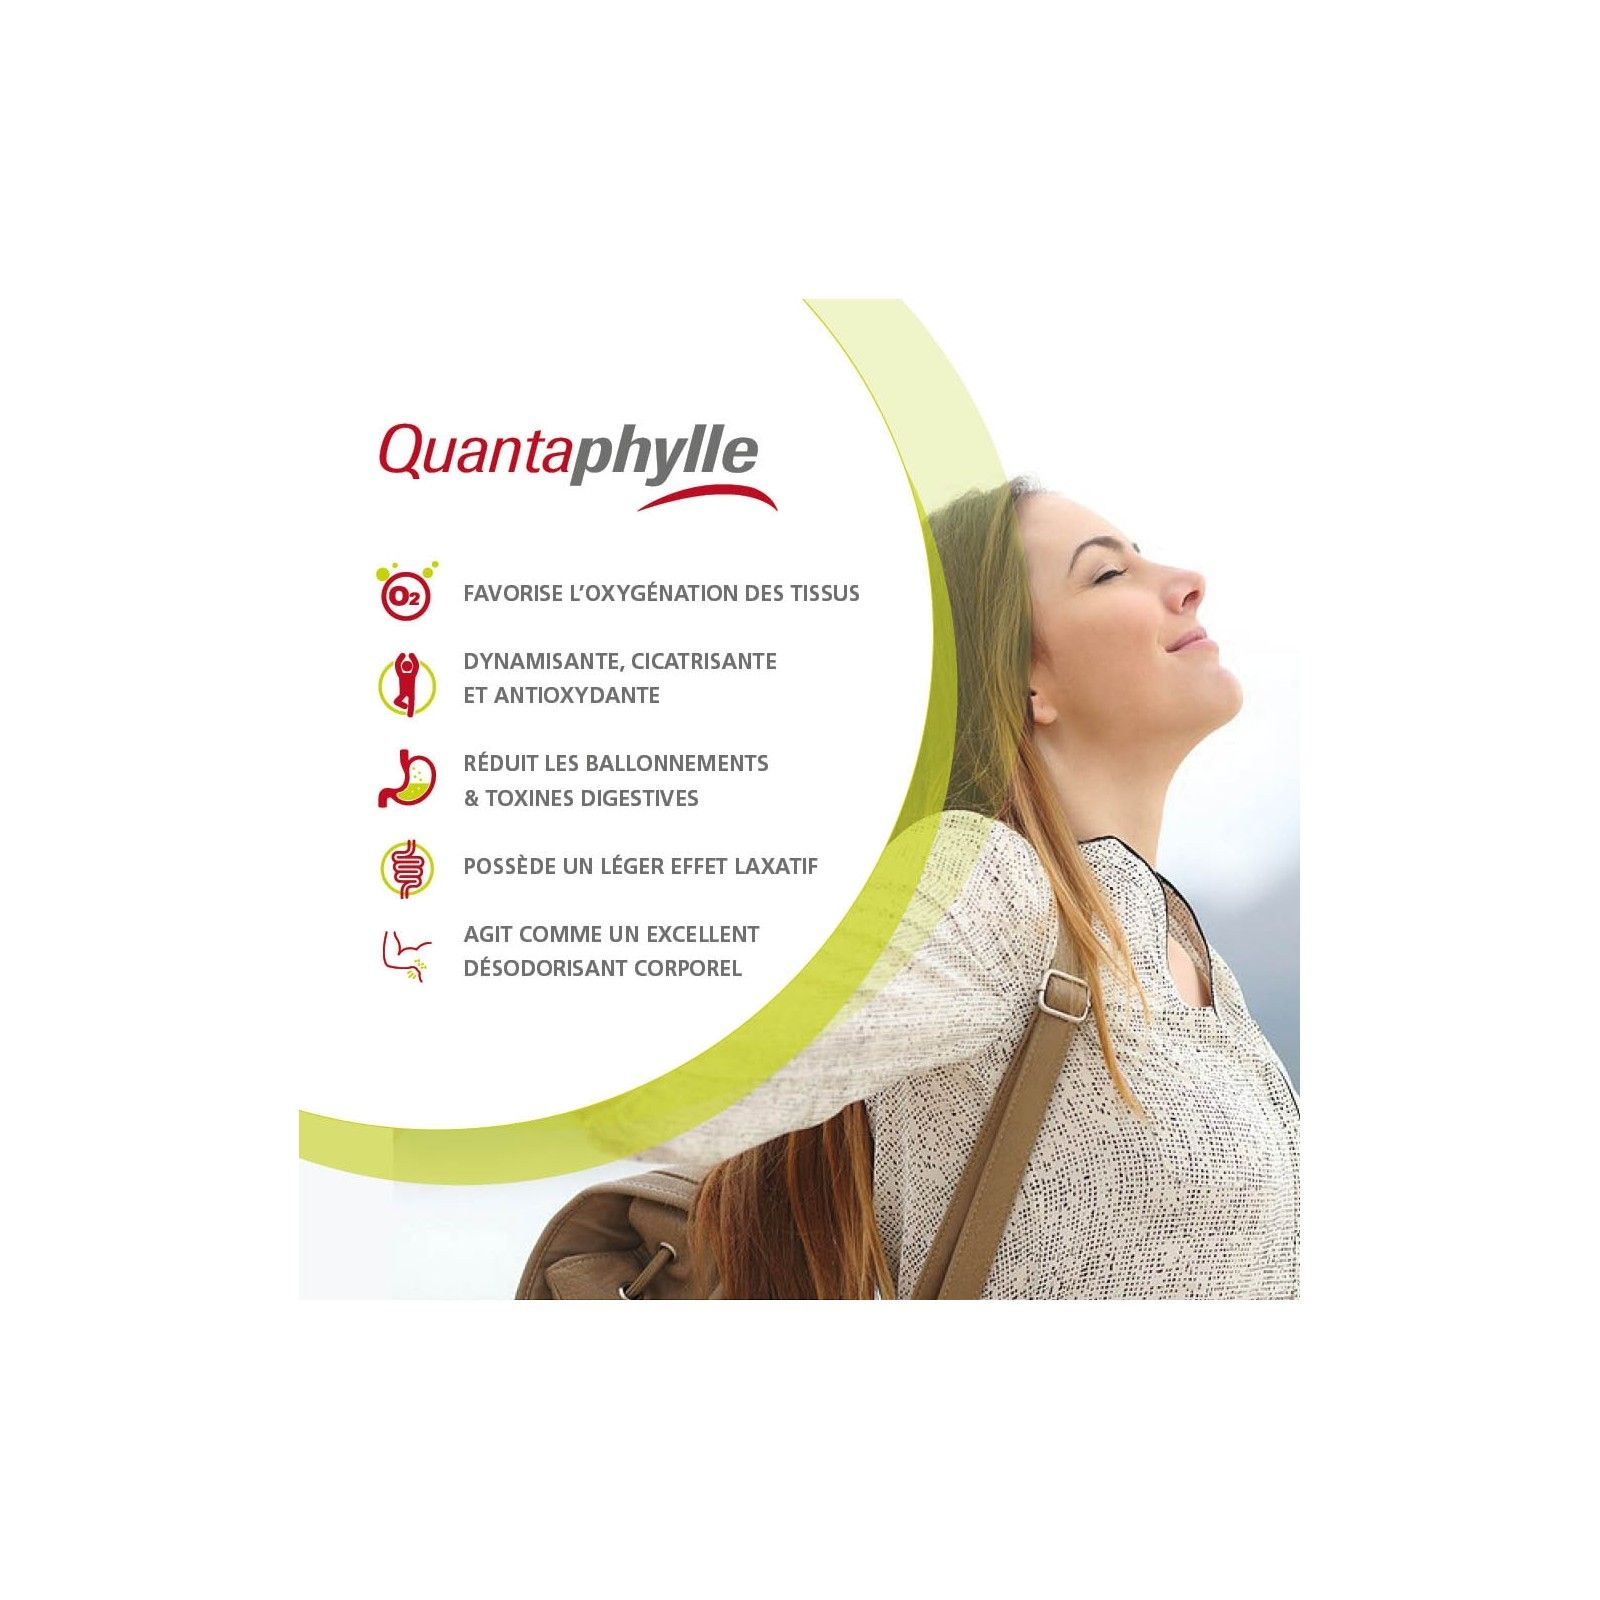 Quantaphylle